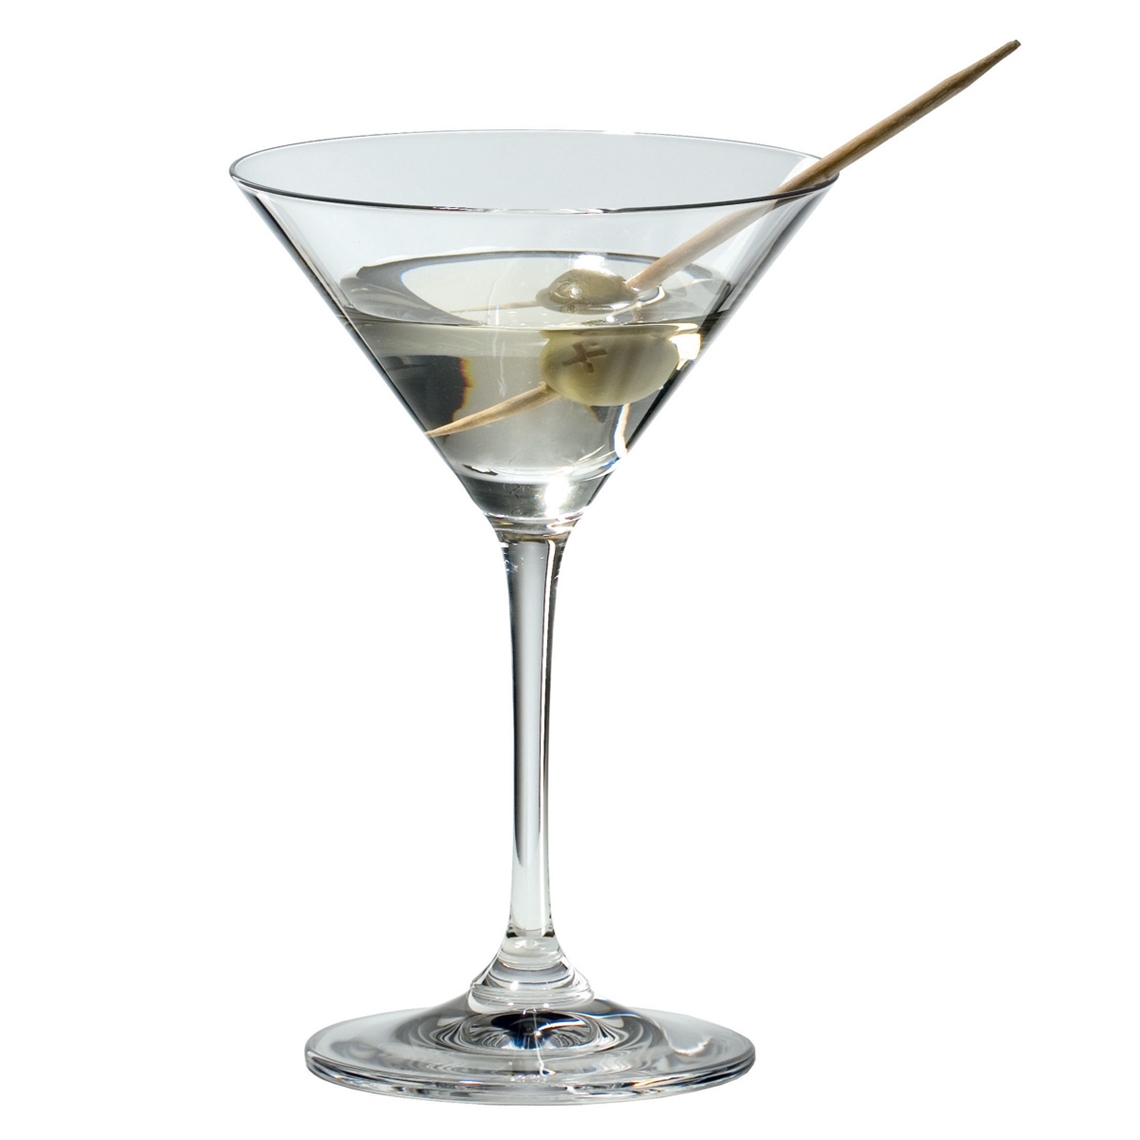 View more prosecco wine glasses from our Martini Glasses range